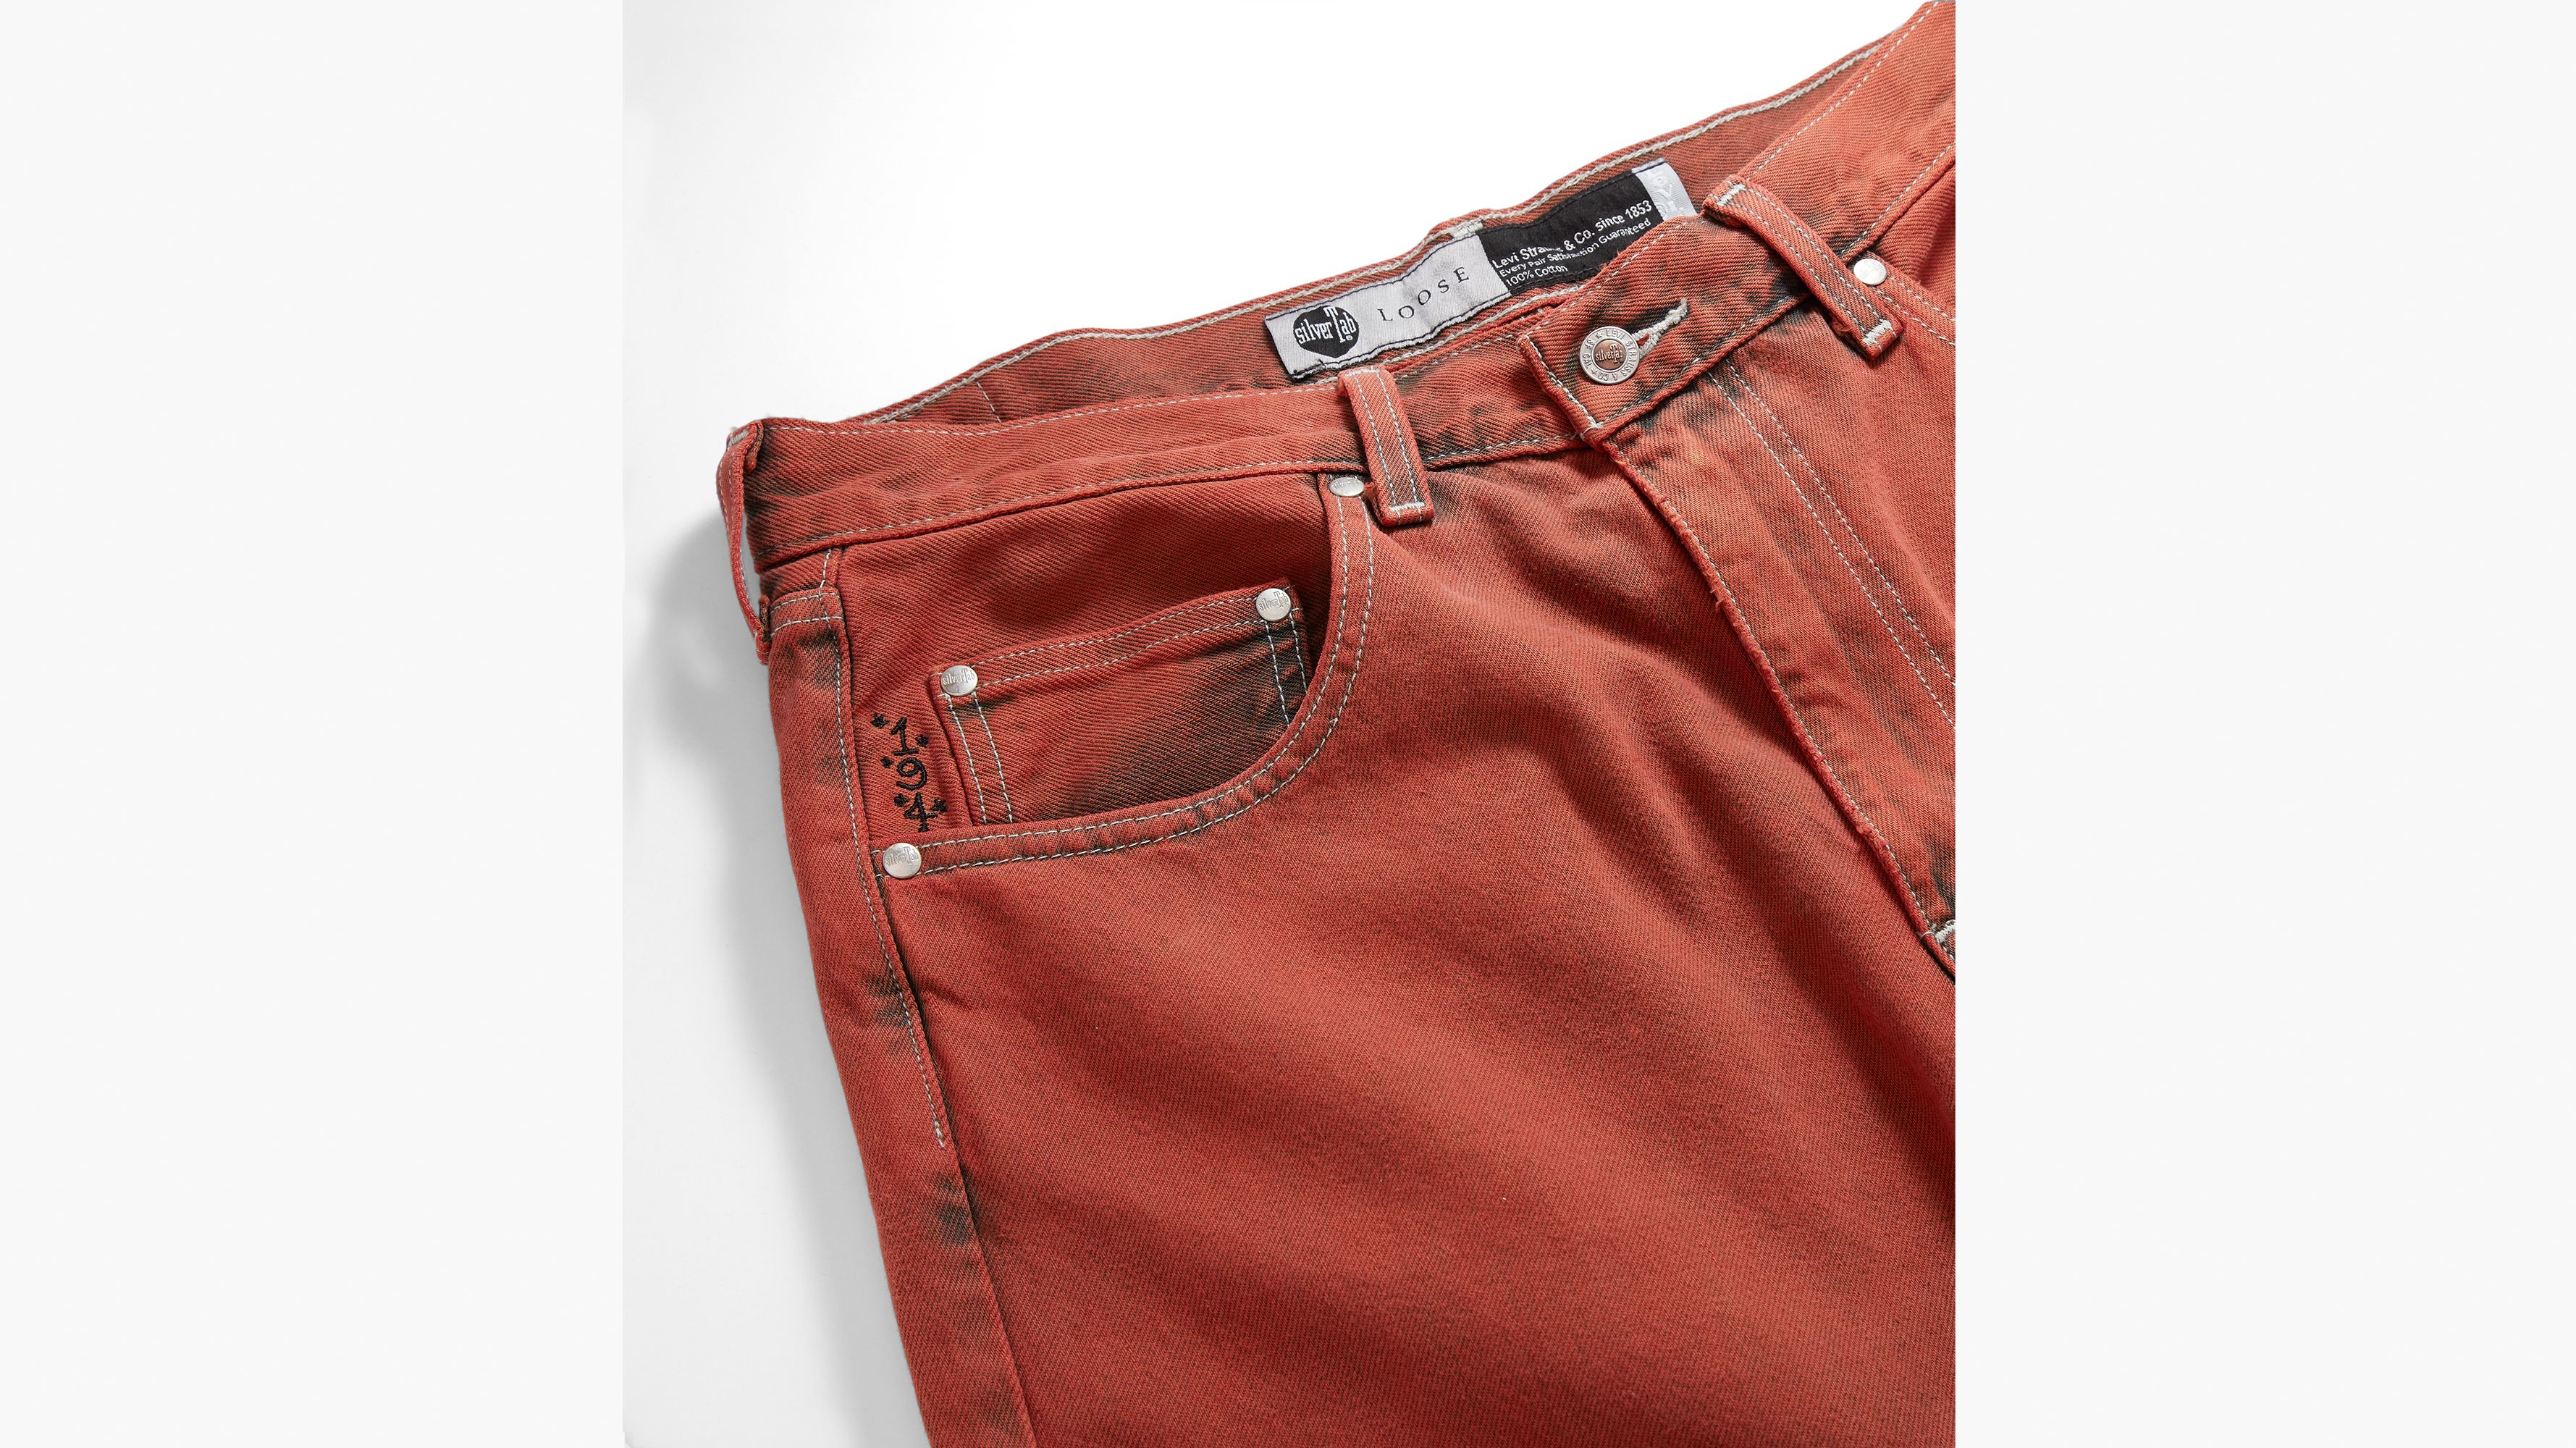 Levi's Red Tab Jeans, $123, yoox.com